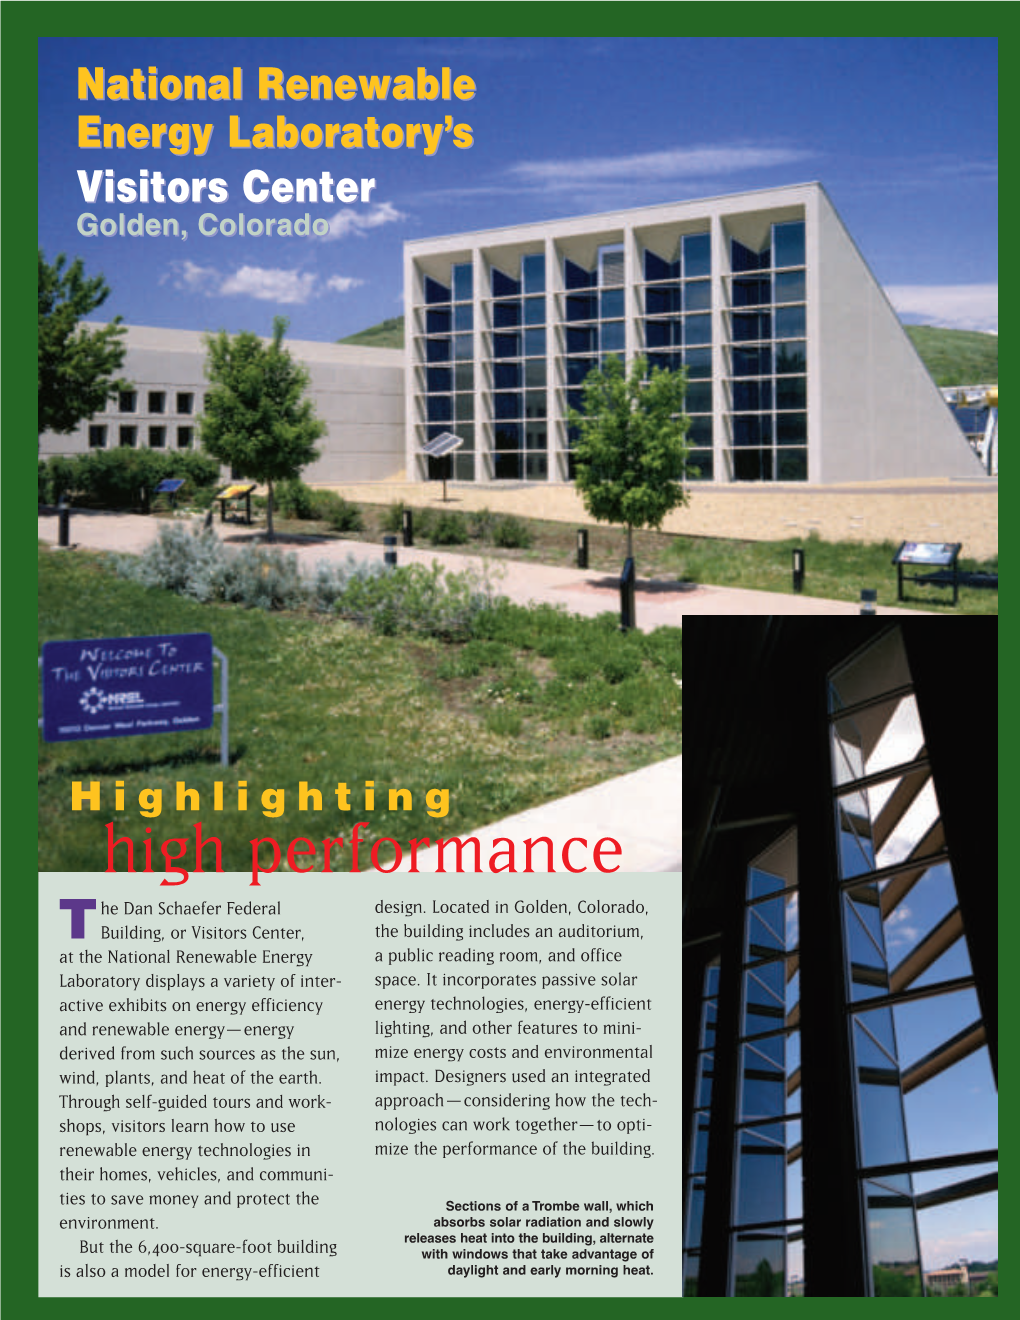 National Renewable Energy Laboratory's Visitors Center